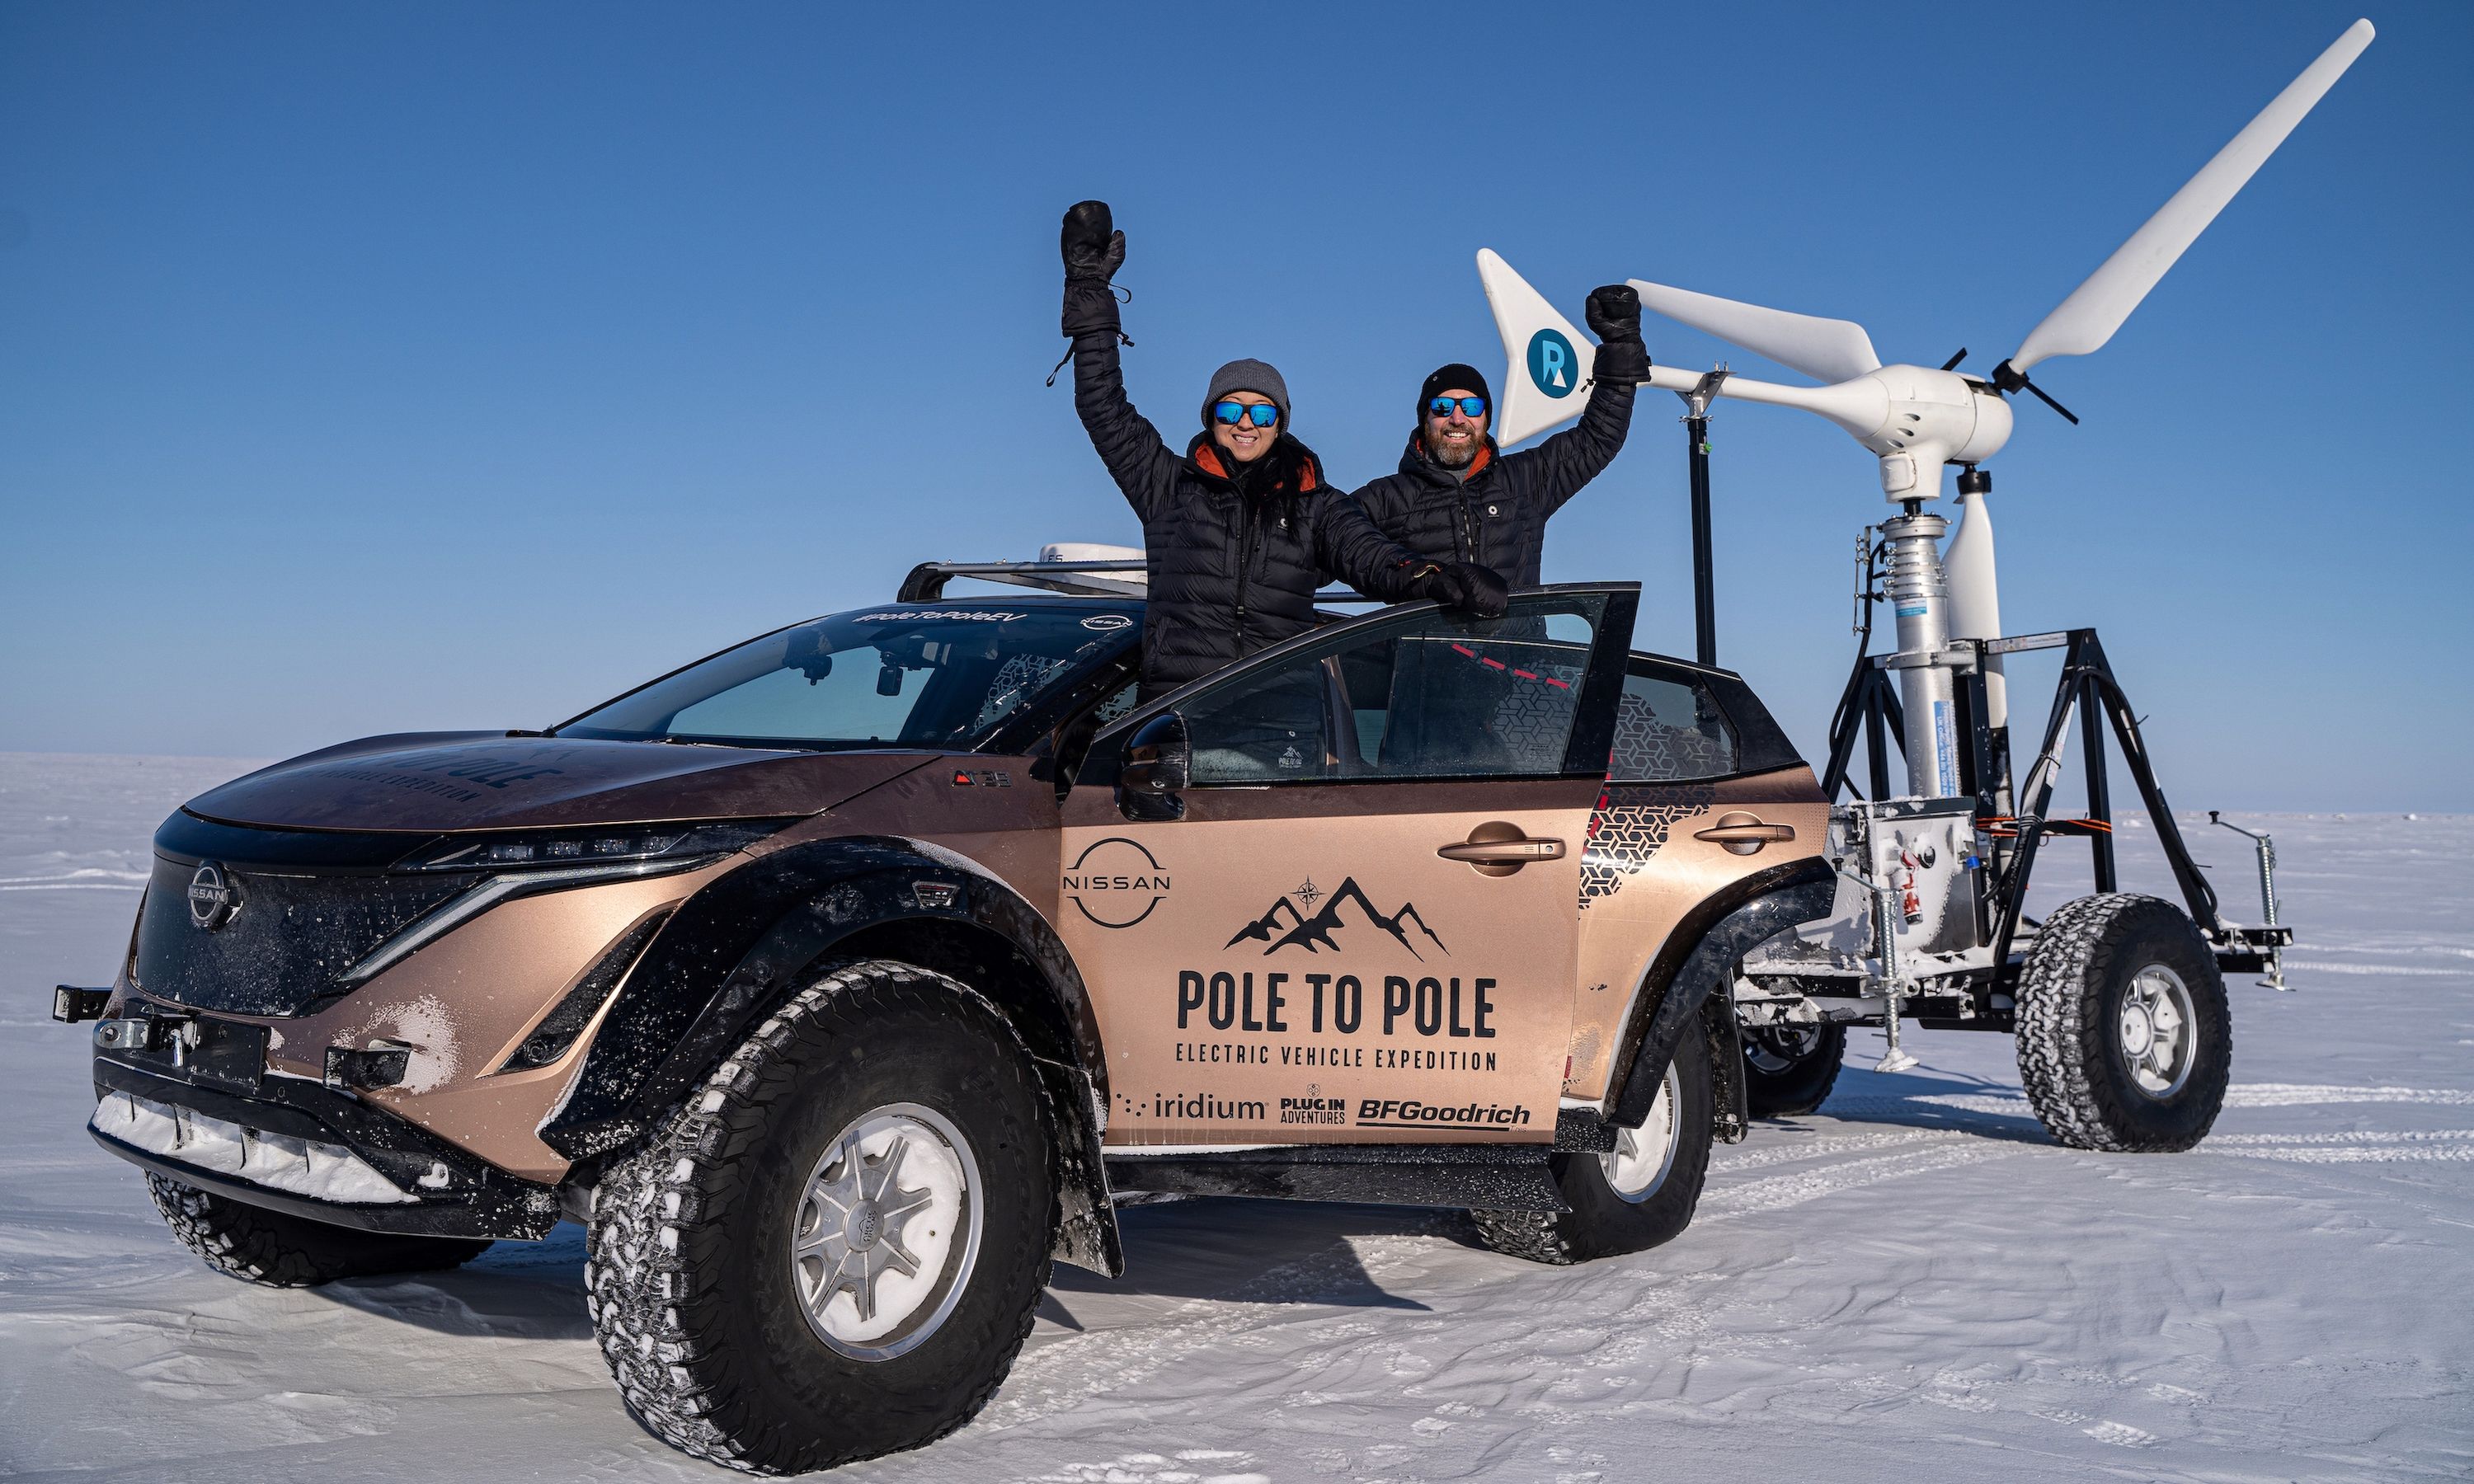 Hoy ha comenzado la épica expedición de 'Polo a Polo' al volante de un coche eléctrico.